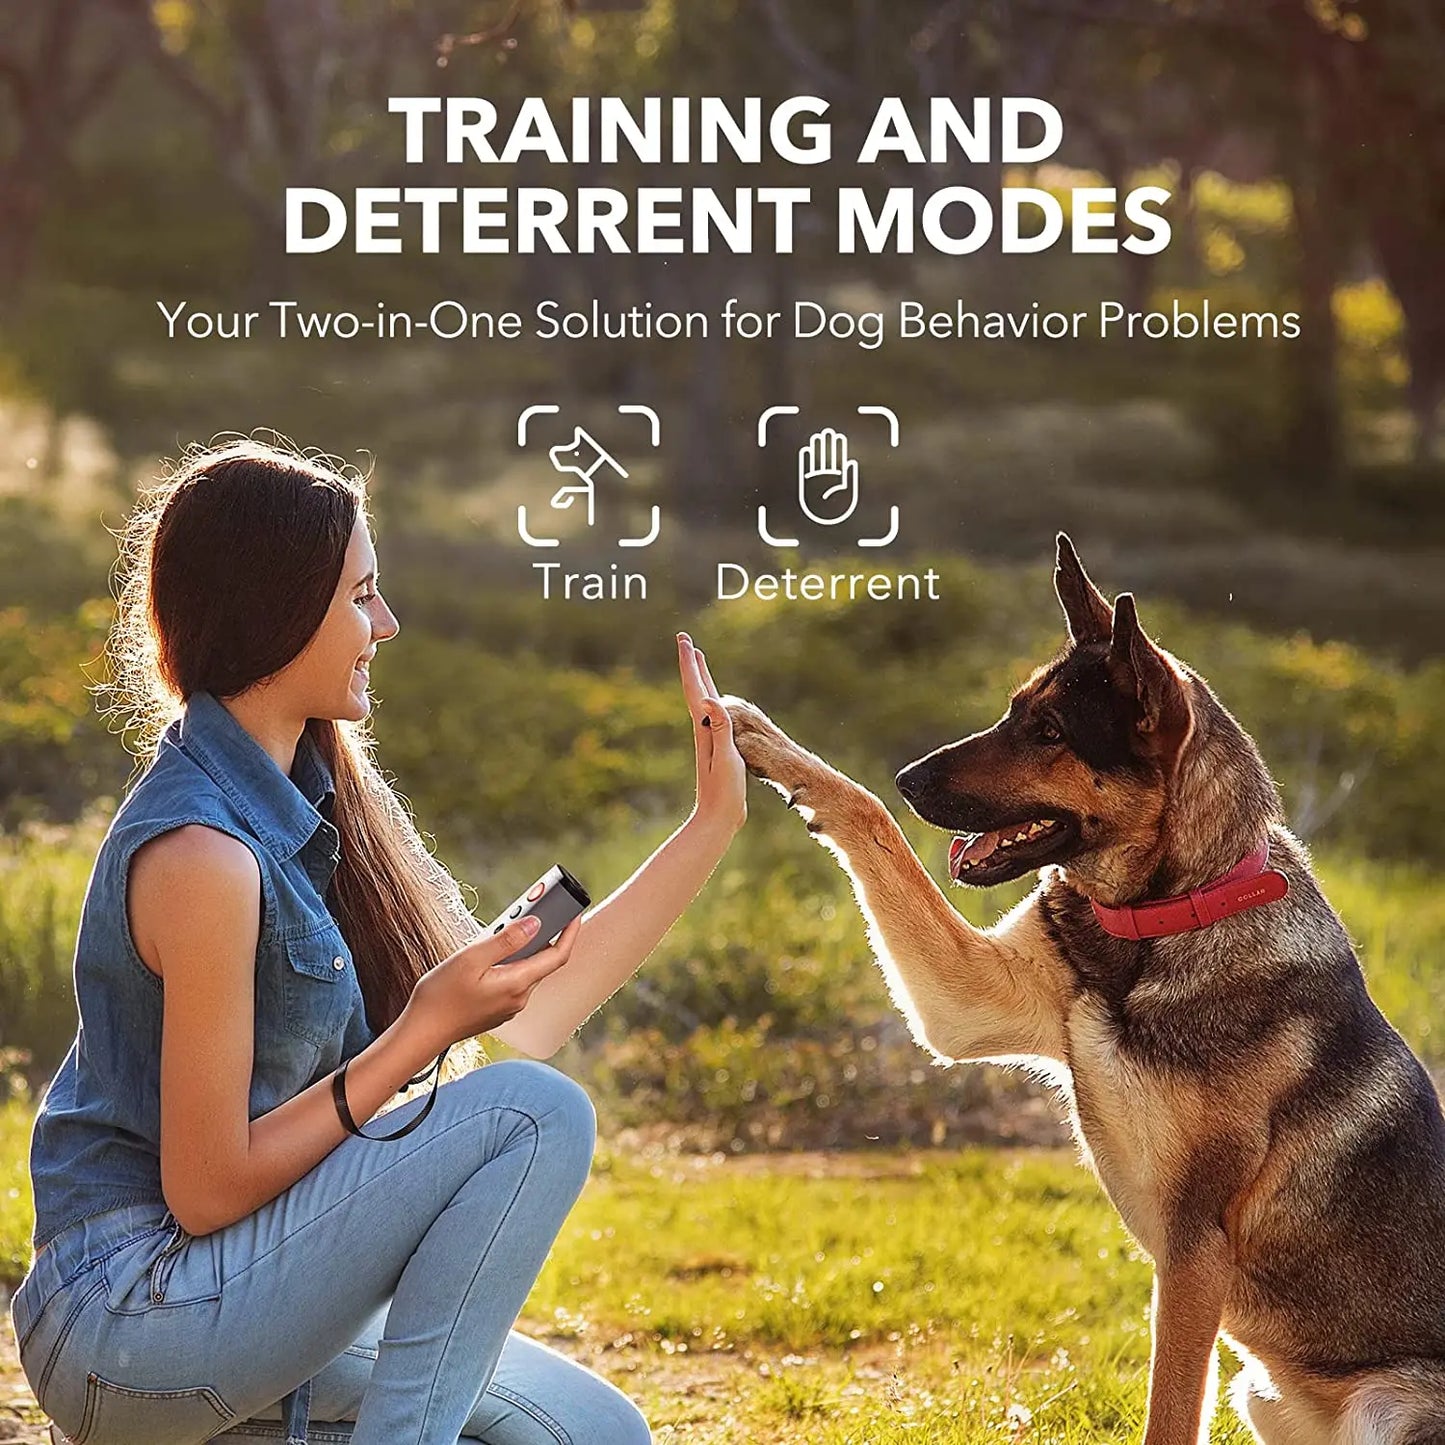 Ultrasonic Electronic Anti Barking Dog Trainer